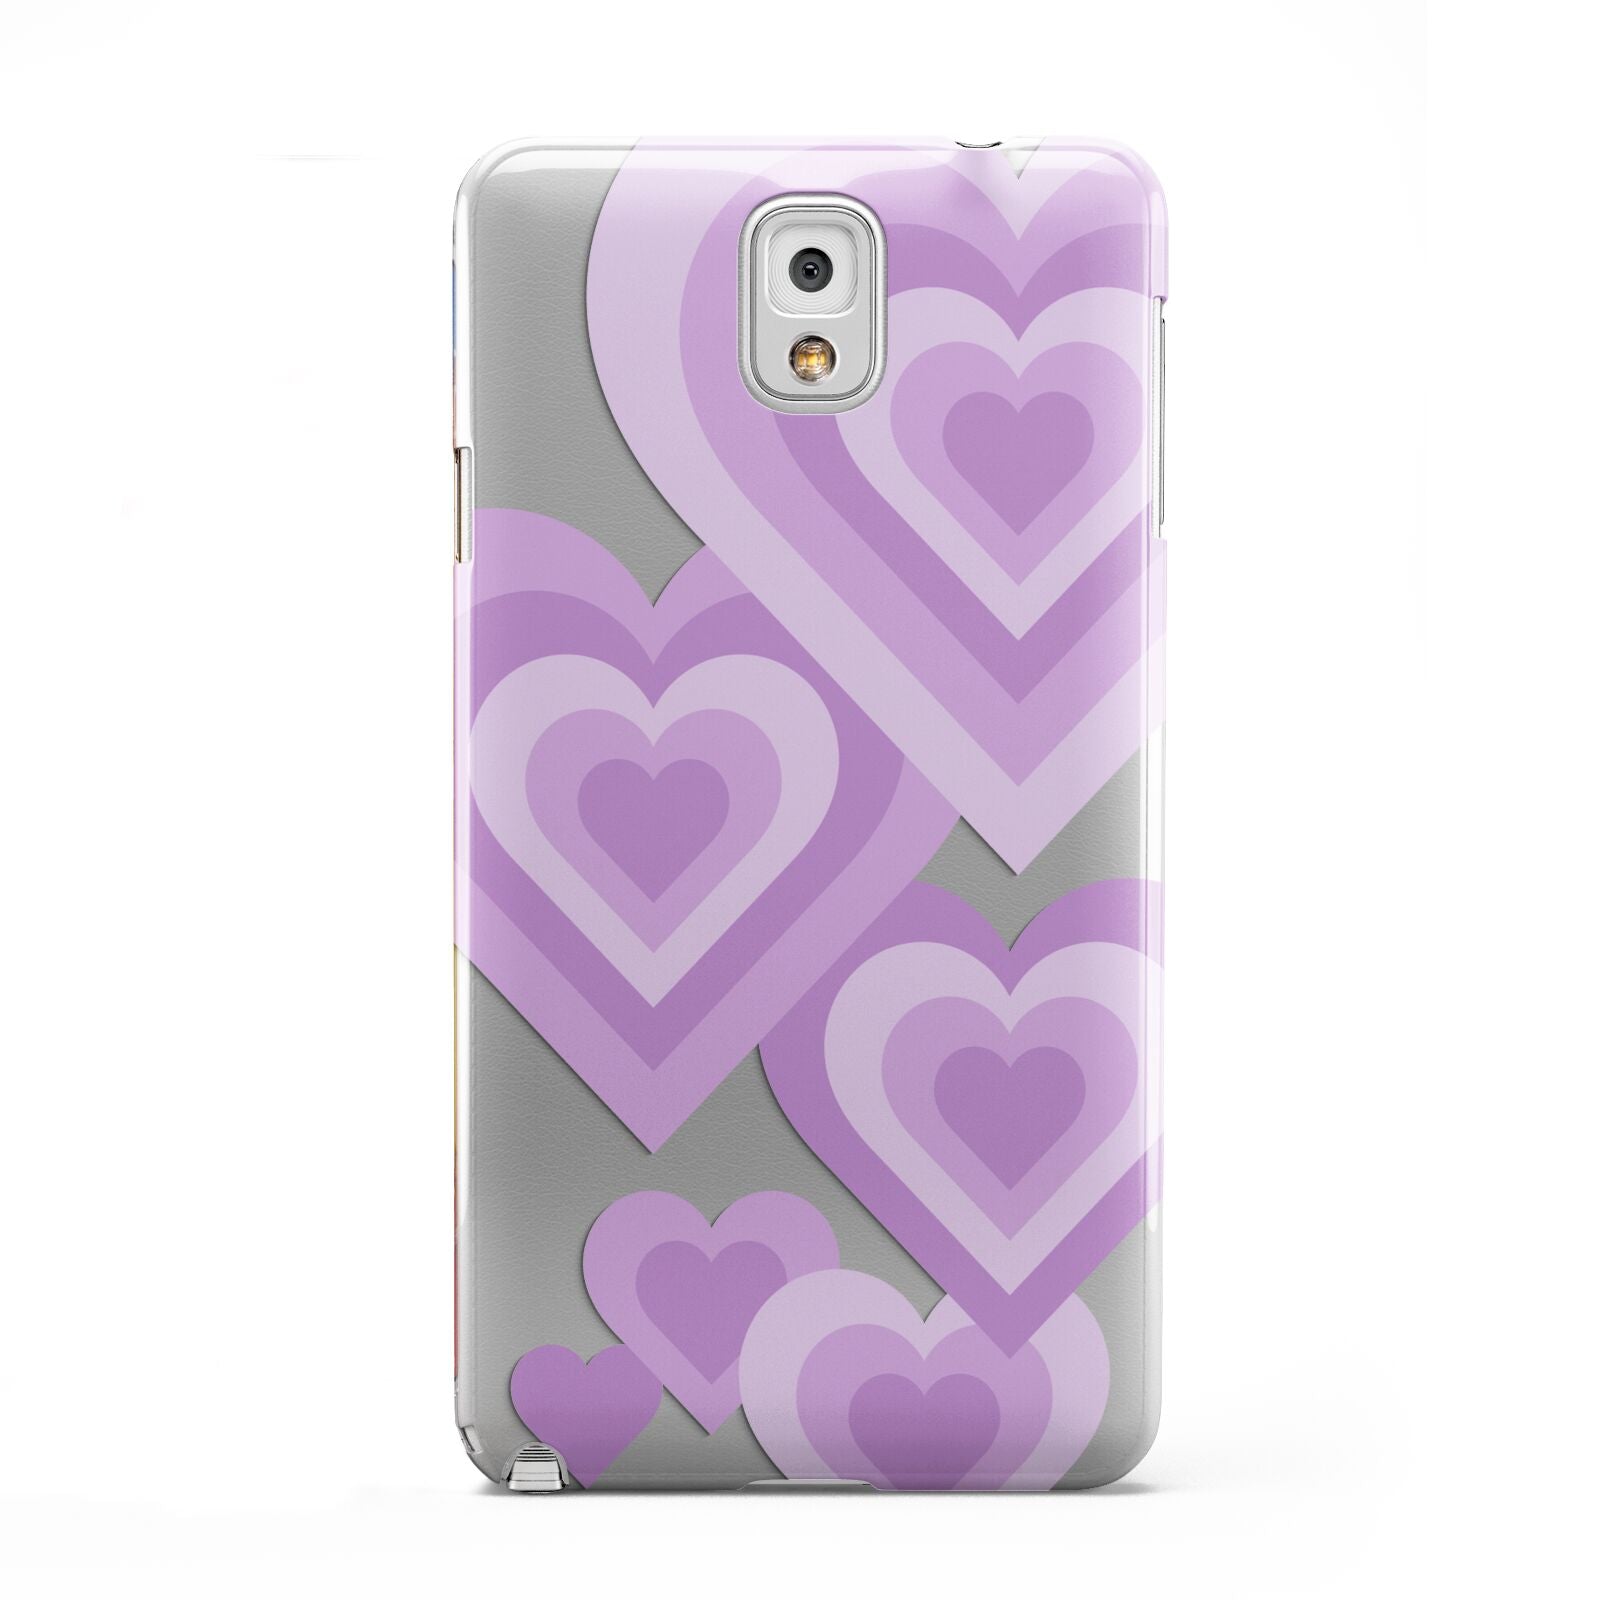 Multi Heart Samsung Galaxy Note 3 Case